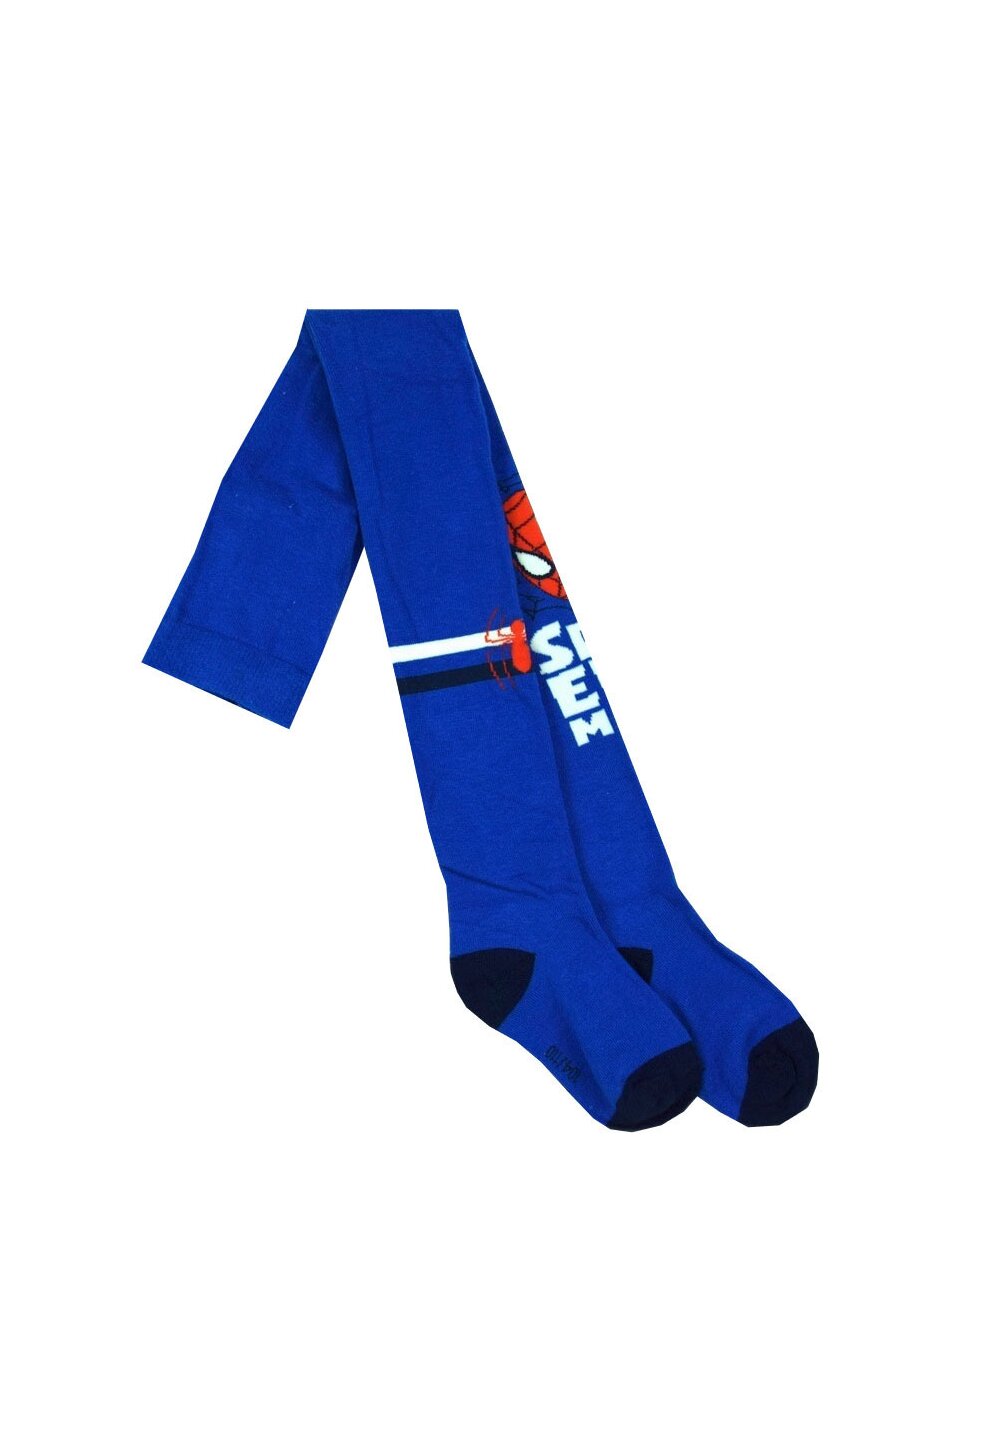 Ciorapi cu chilot, 75% bumbac, Spider Man, albastri DISNEY